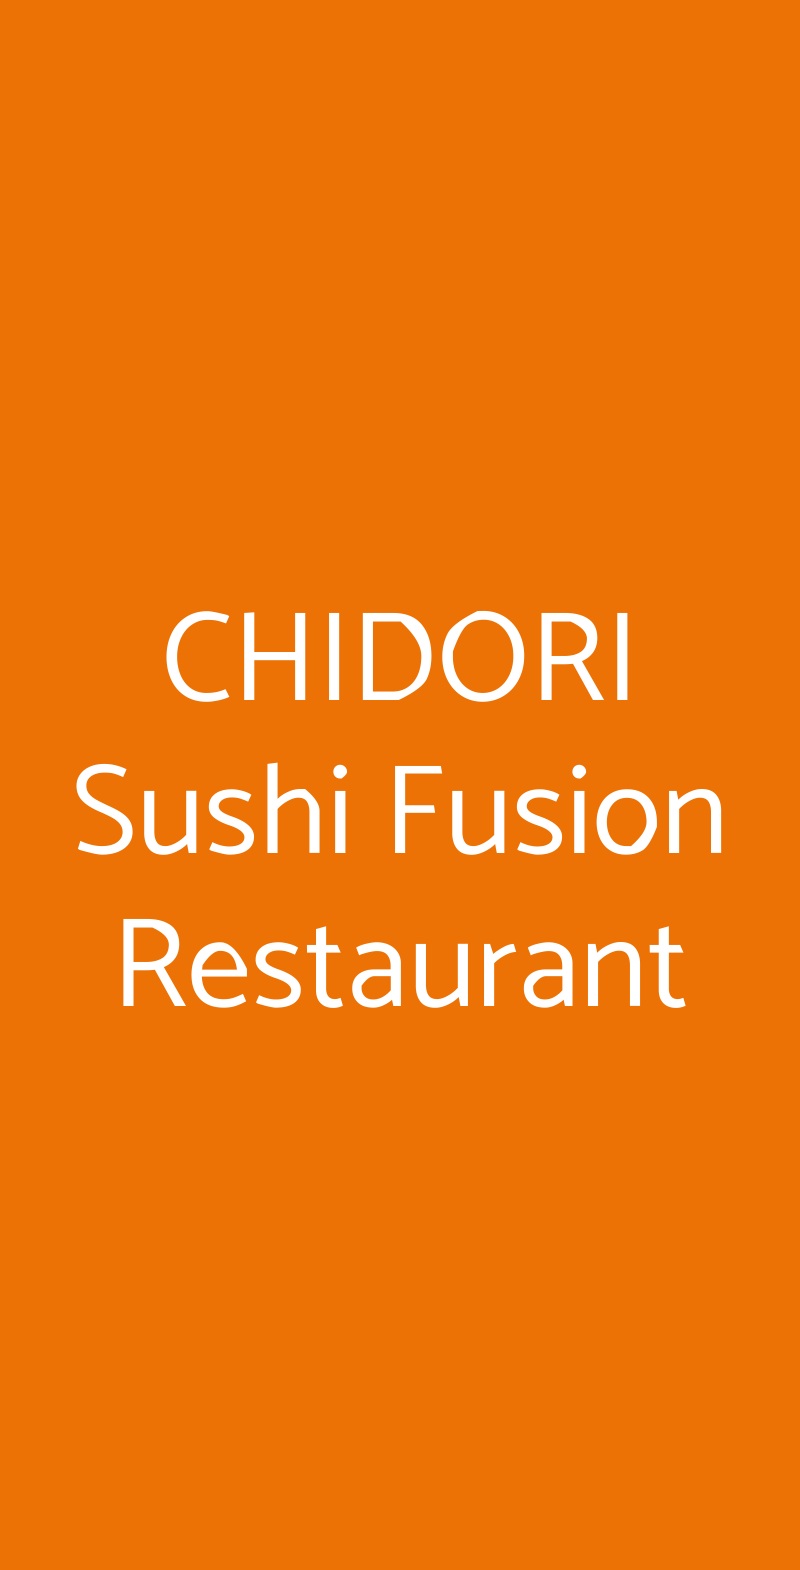 CHIDORI Sushi Fusion Restaurant Milano menù 1 pagina